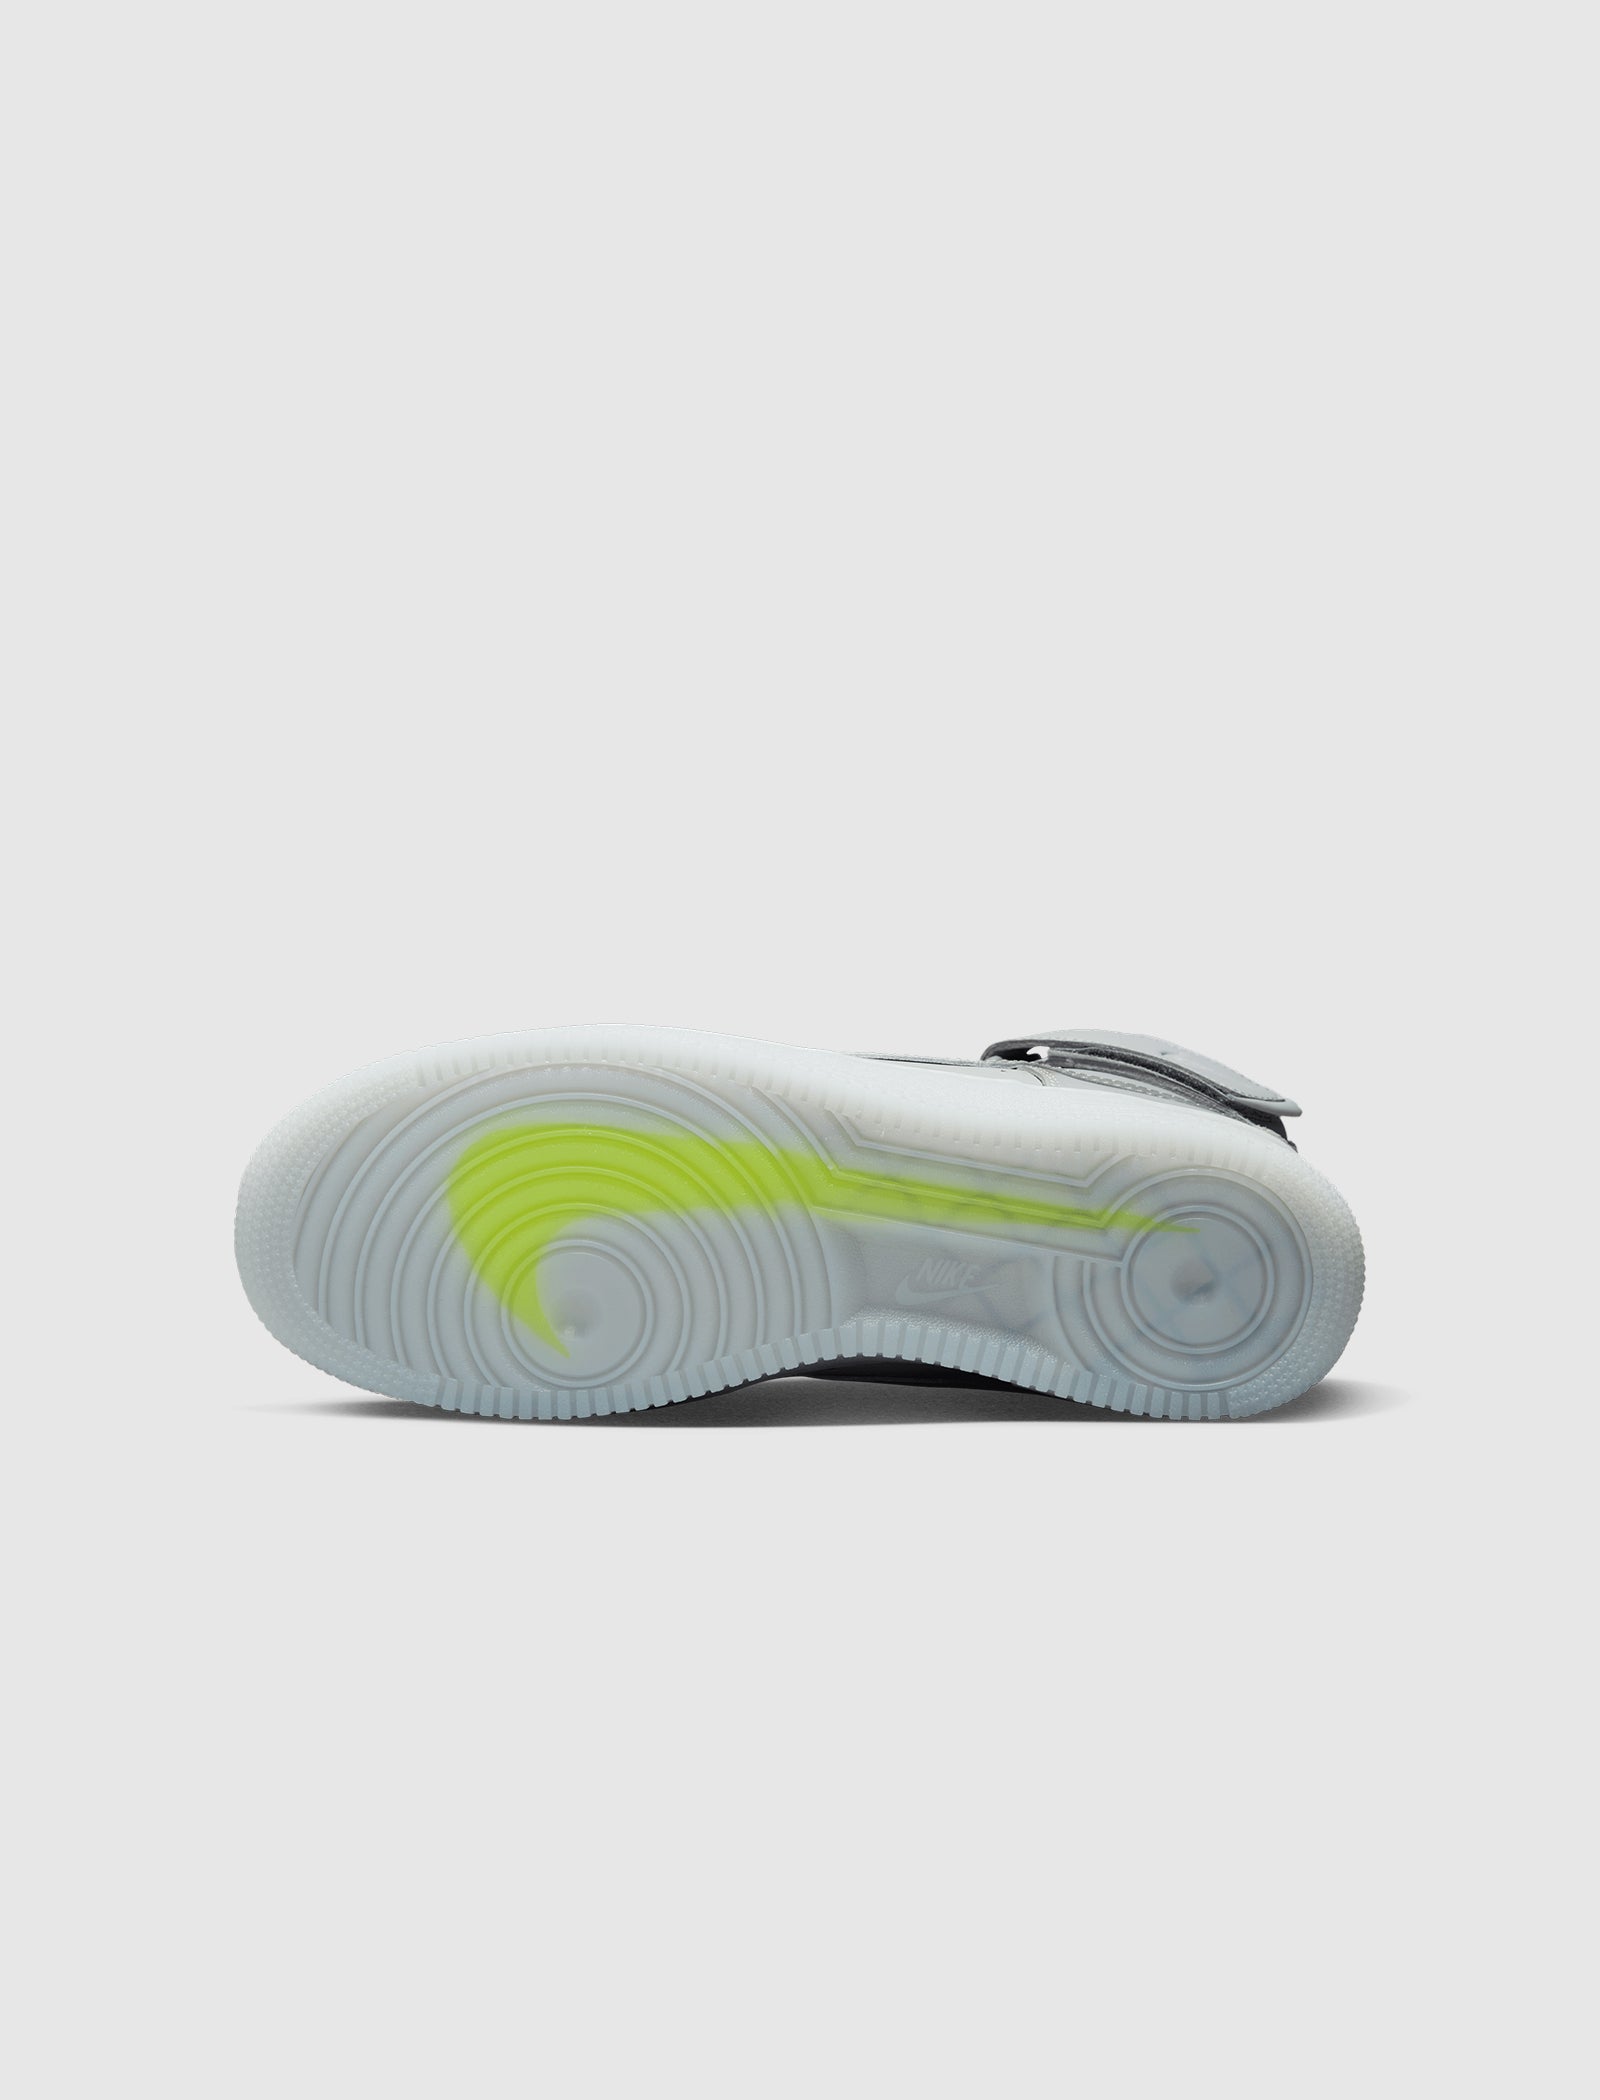 Nike Air Force 1 High '07 LV8 sneakers, Grey